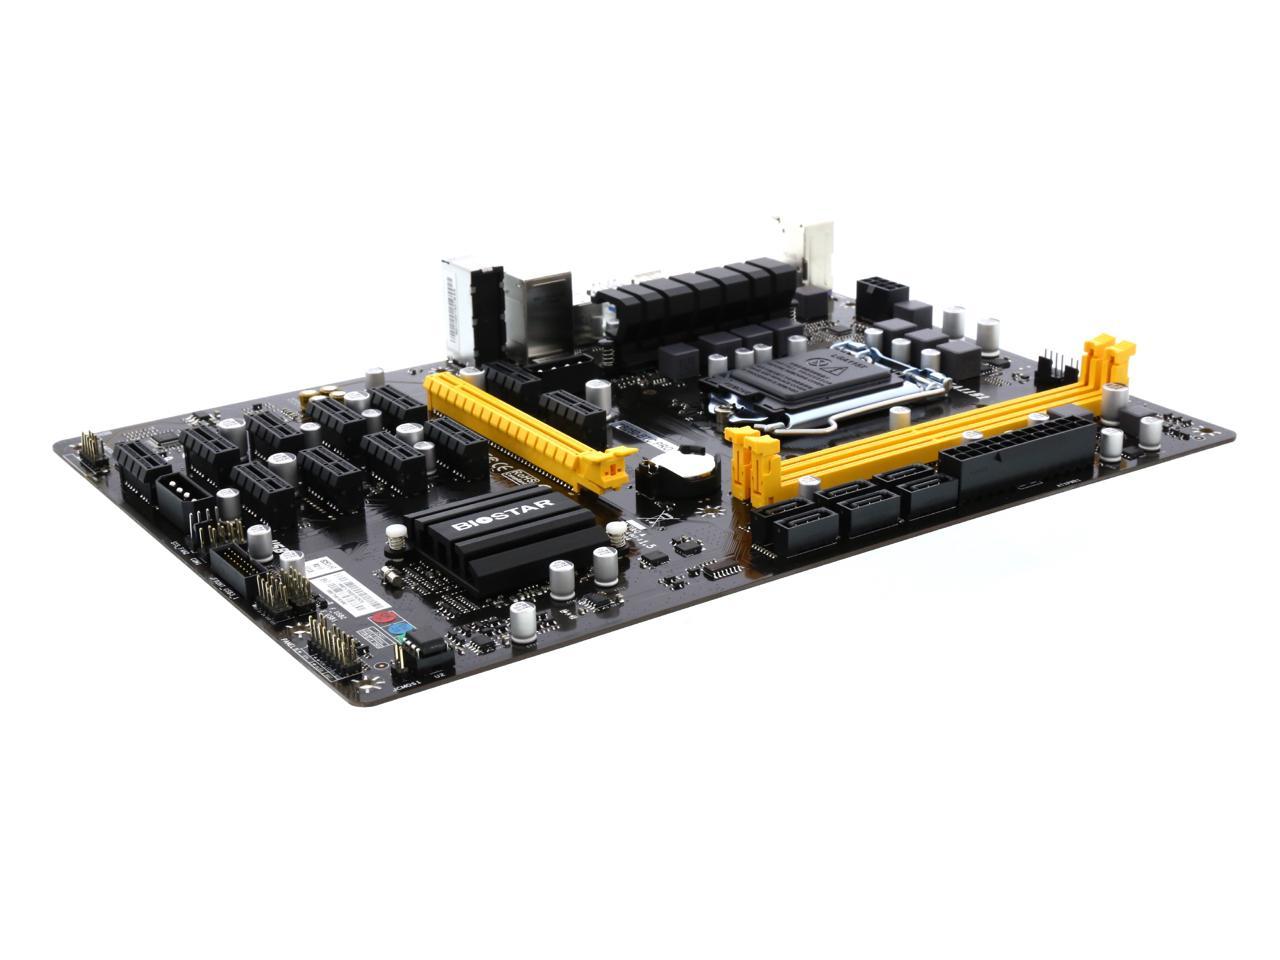 BIOSTAR TB250-BTC PRO LGA 1151 Intel B250 SATA 6Gb/s USB 3.0 ATX Intel  Motherboard for Cryptocurrency Mining (BTC)